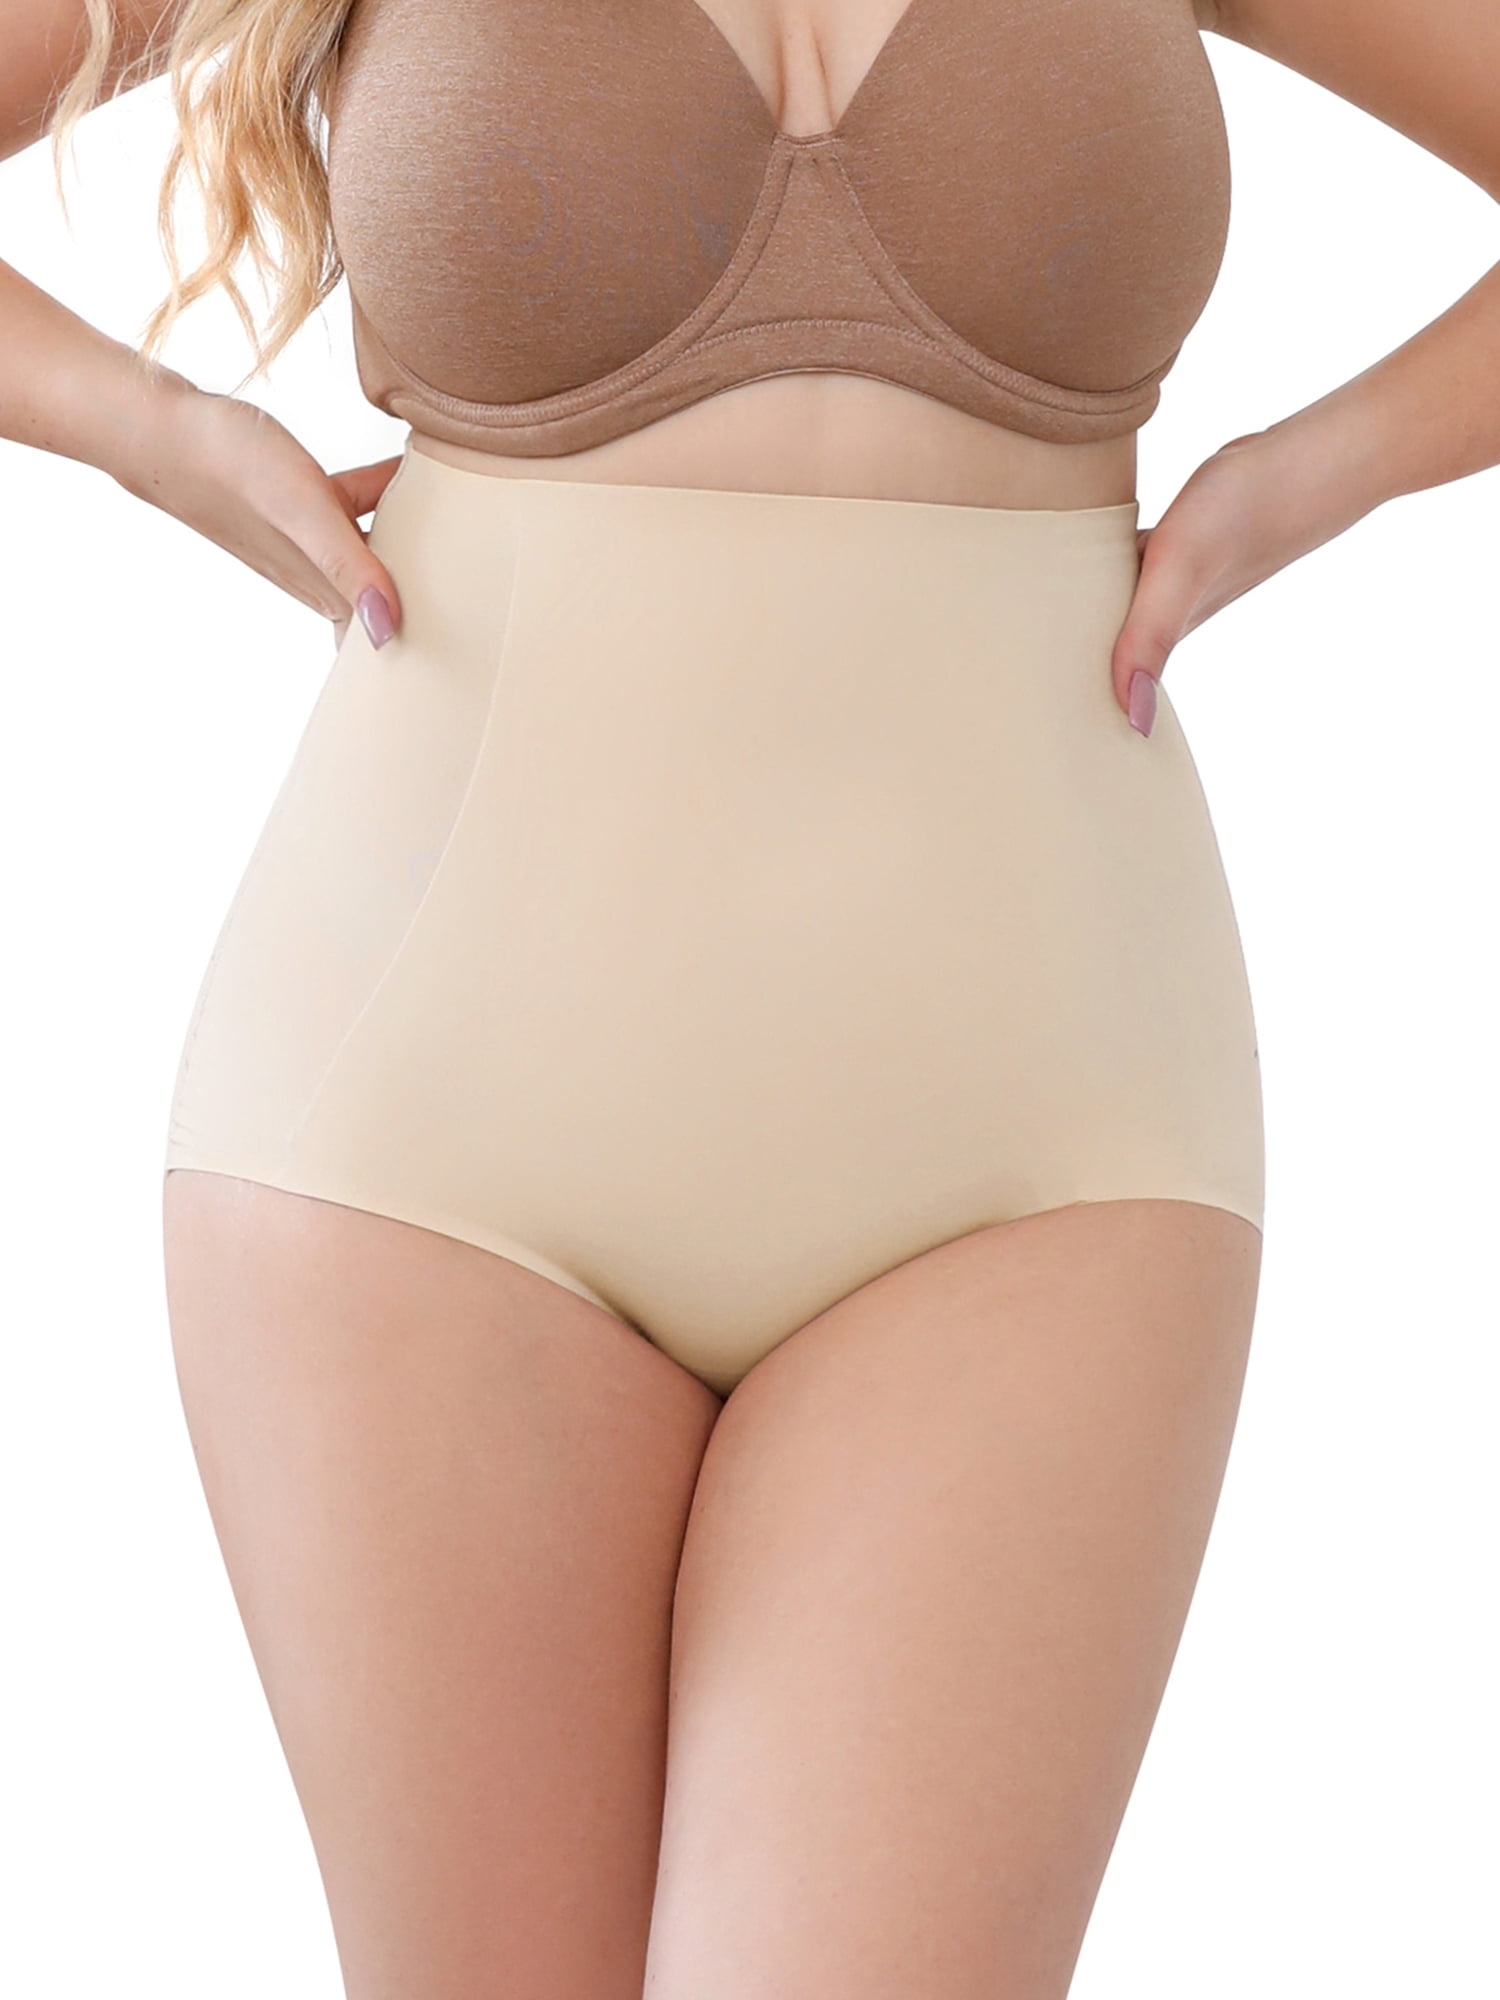 DODOING Women's Tummy Control Shapewear Butt Lifting Panties